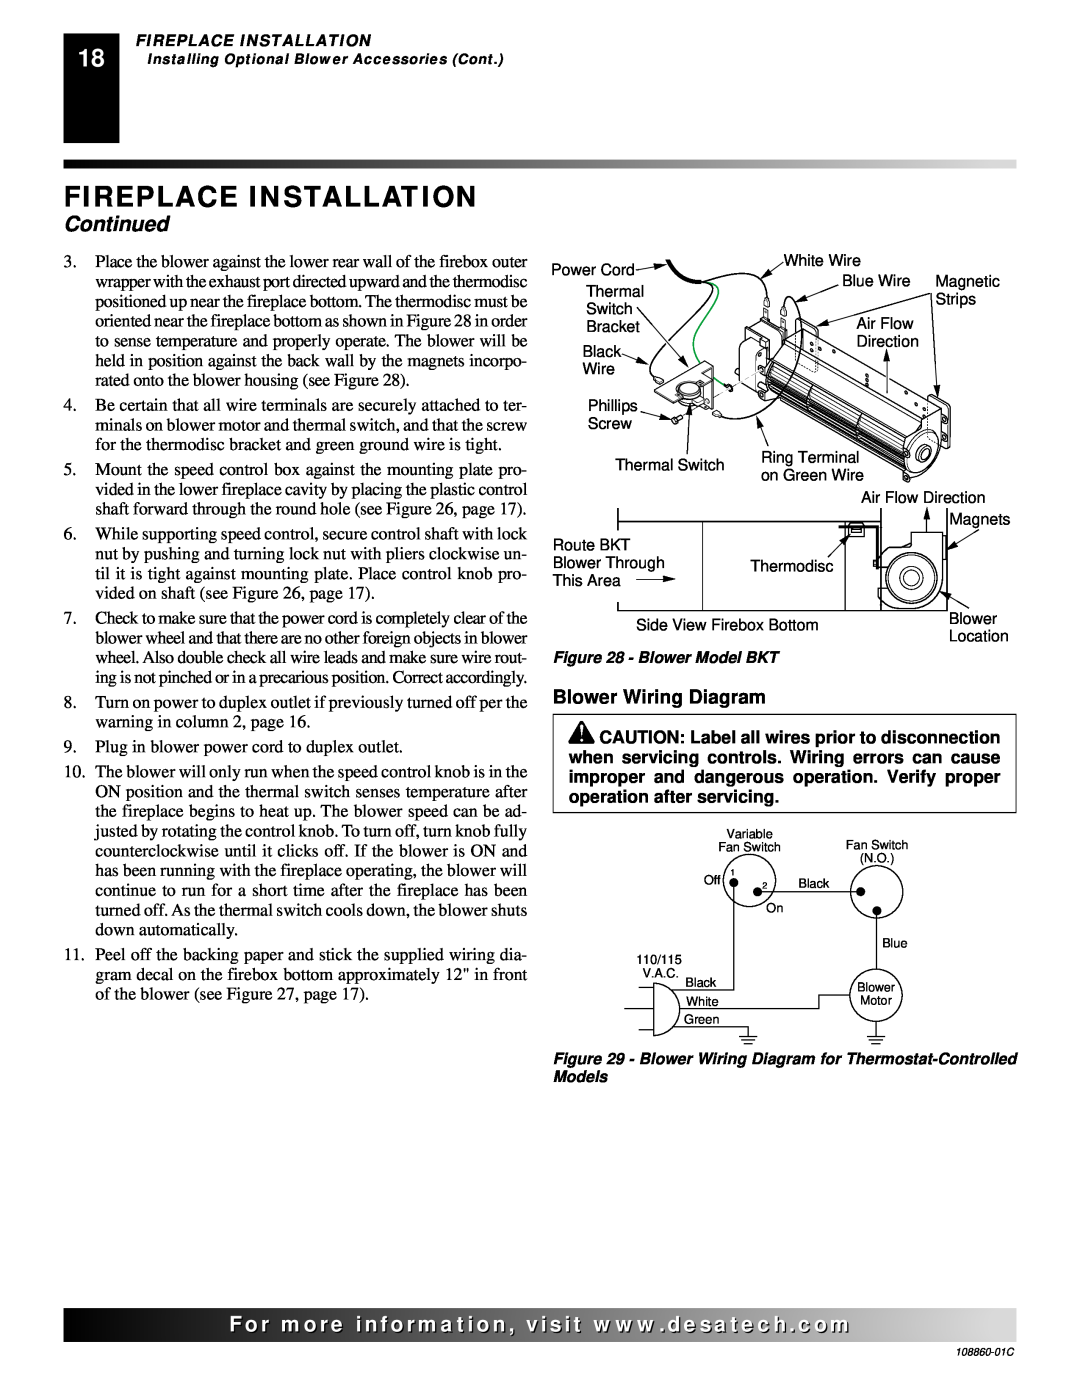 Desa (V)T36EP, (V)T36EN installation manual Fireplace Installation, Continued, Blower Wiring Diagram 